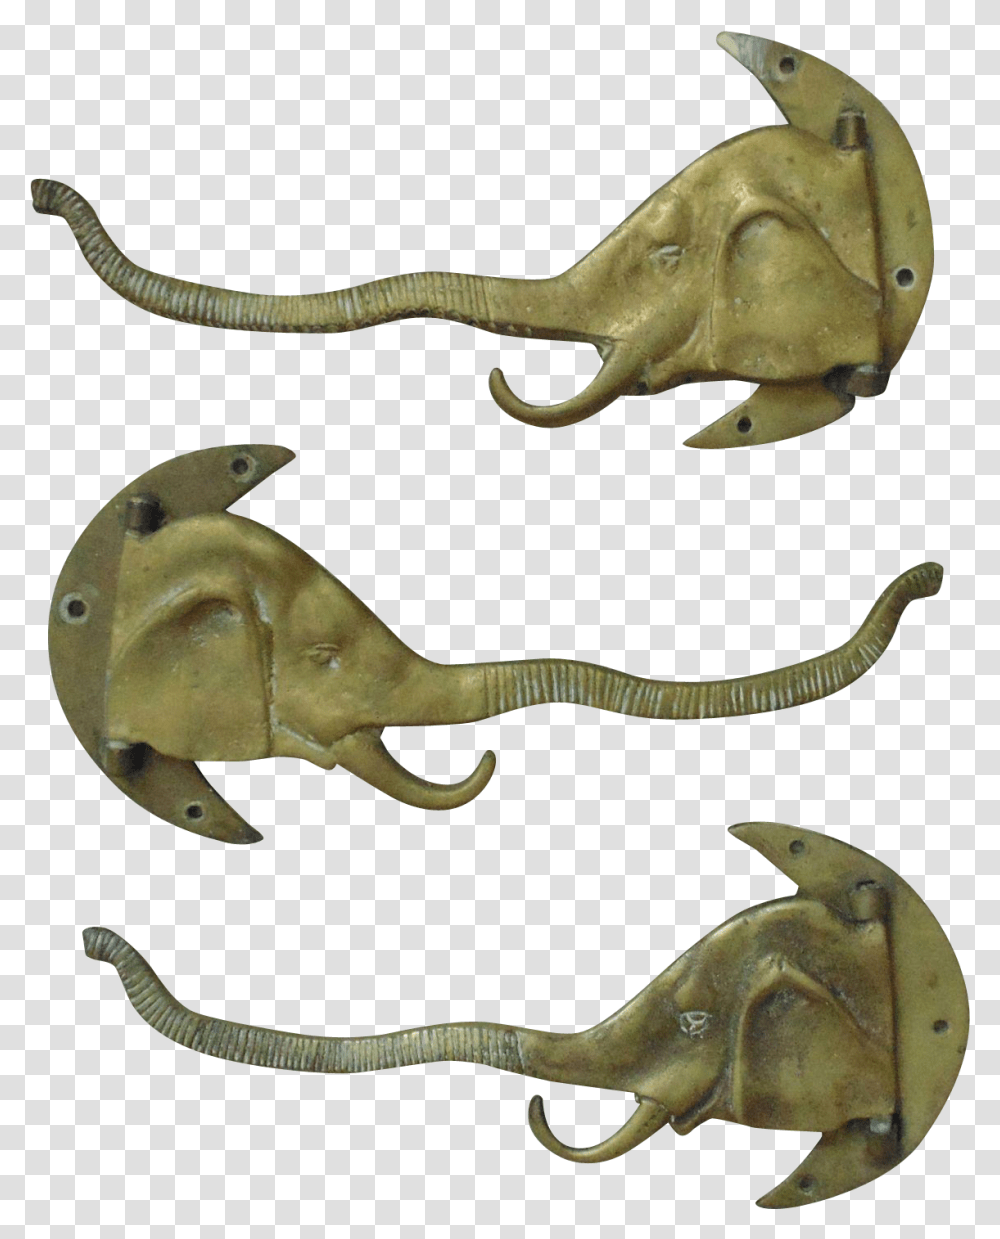 Elephant Head Indian Elephant, Lizard, Reptile, Animal, Snake Transparent Png